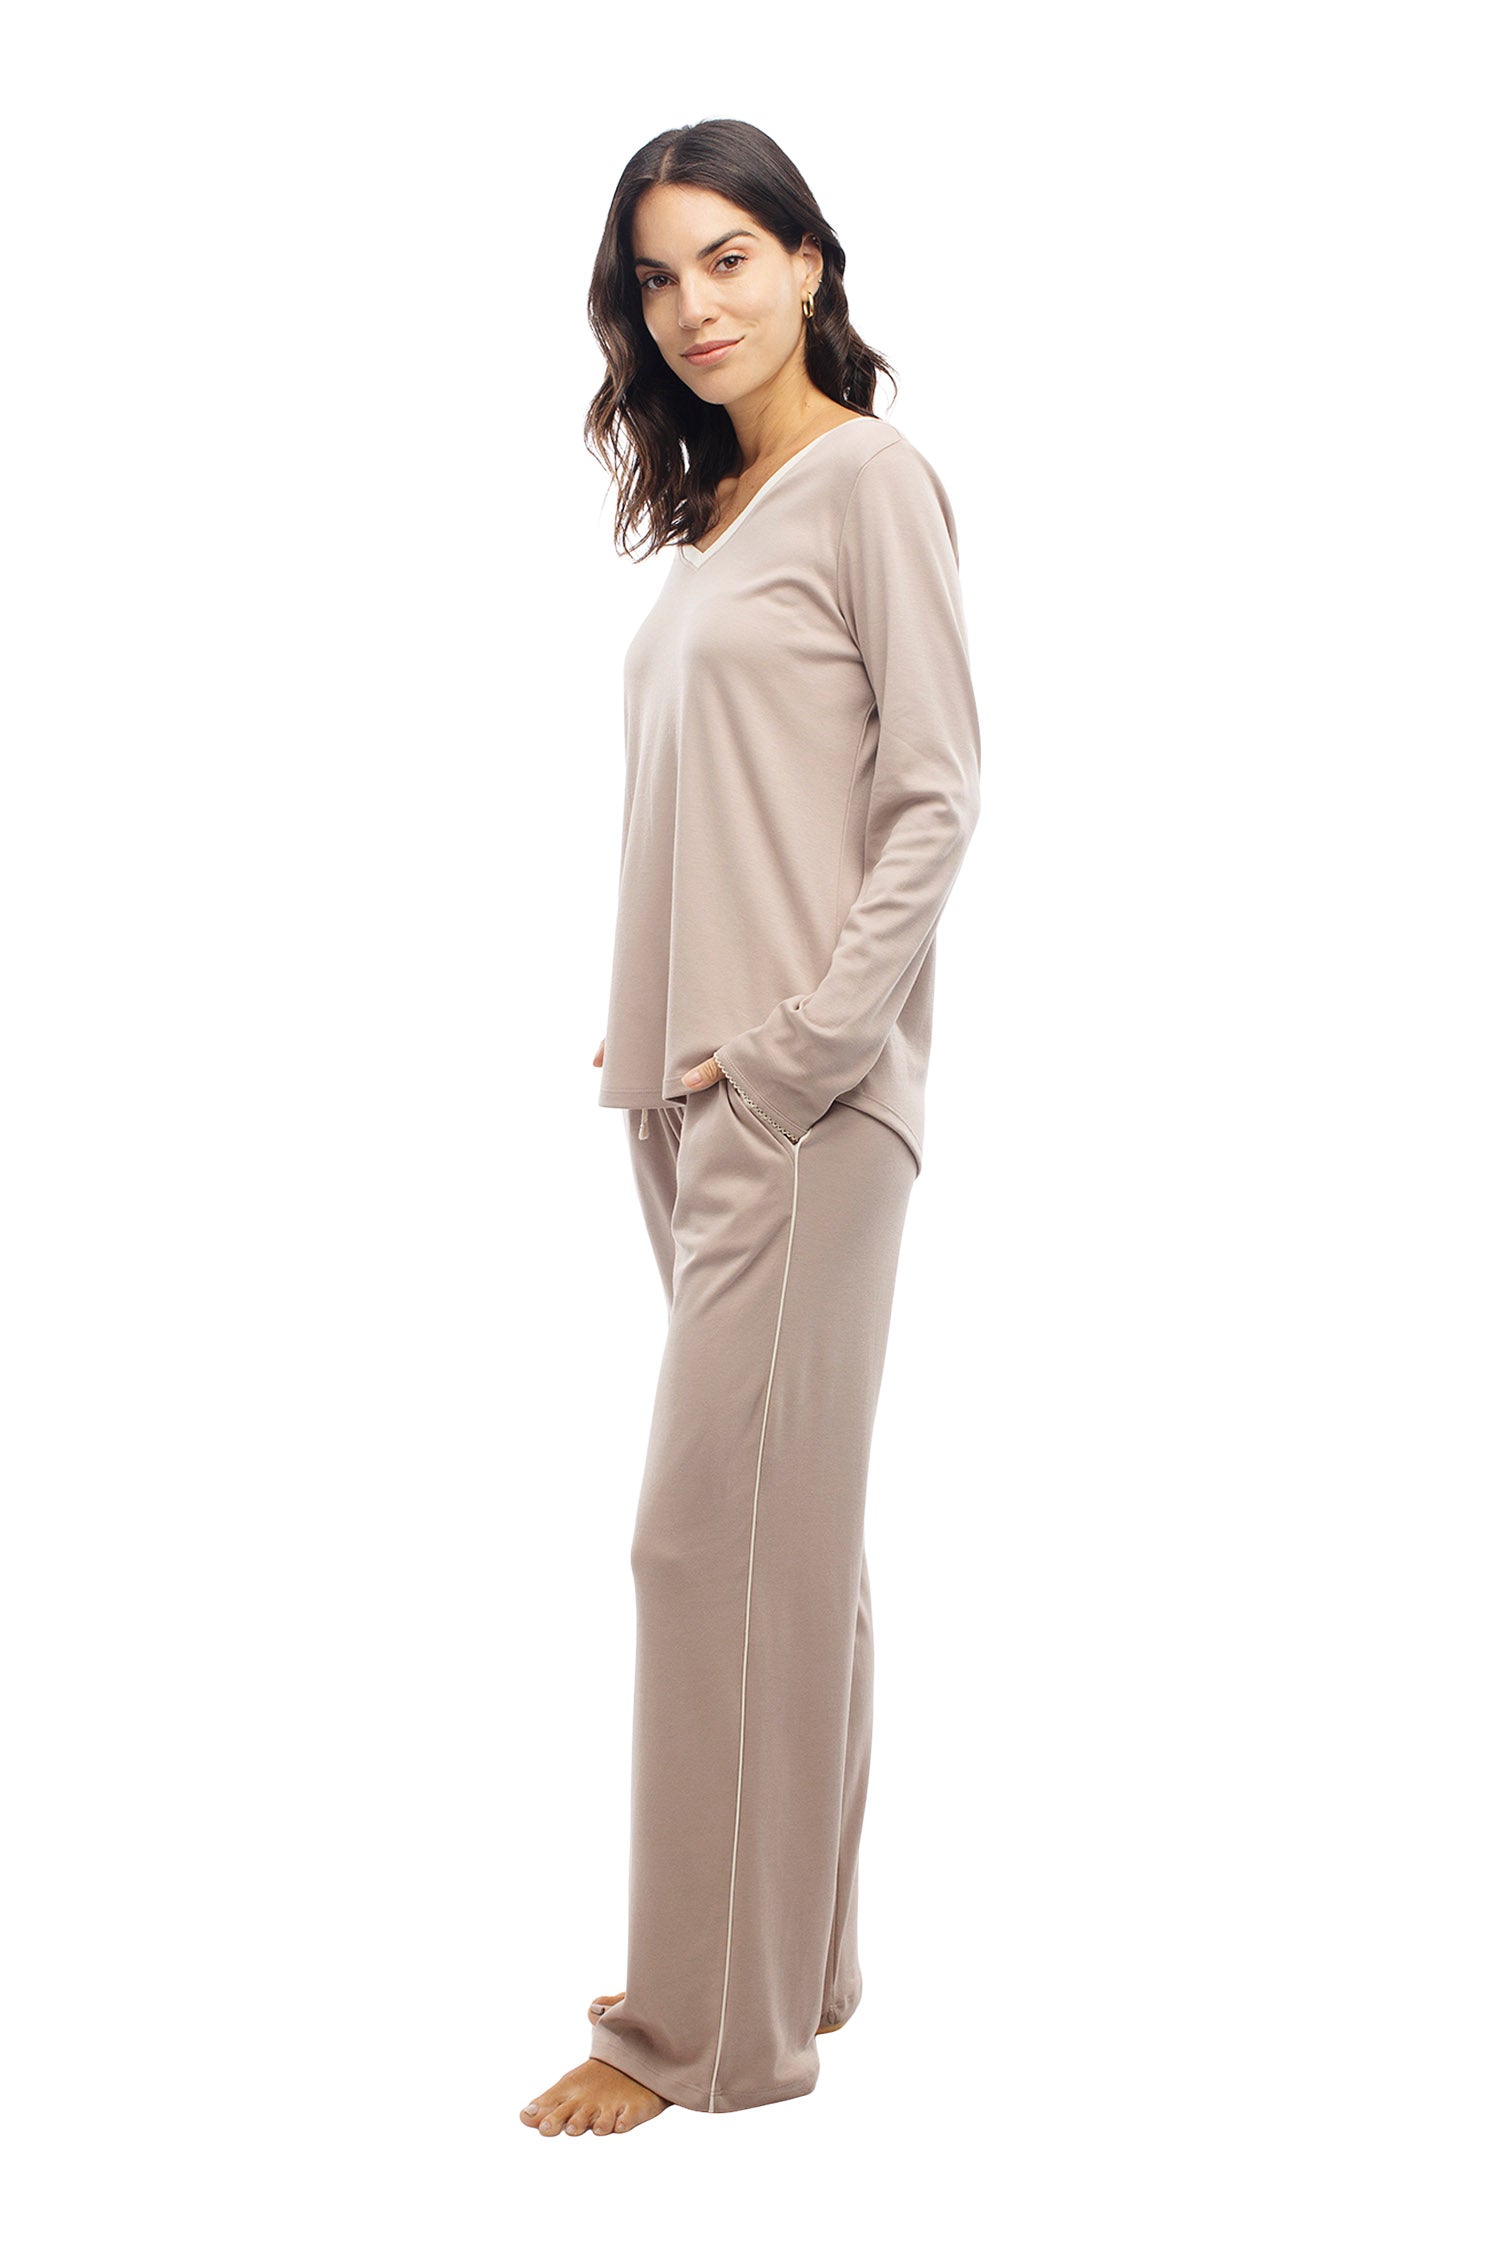 Pima Cotton Women's Pajamas, Incredibly Soft & Cozy, Long & Plus Sizes  Too, Jijamas Long-Sleeve in Etherea